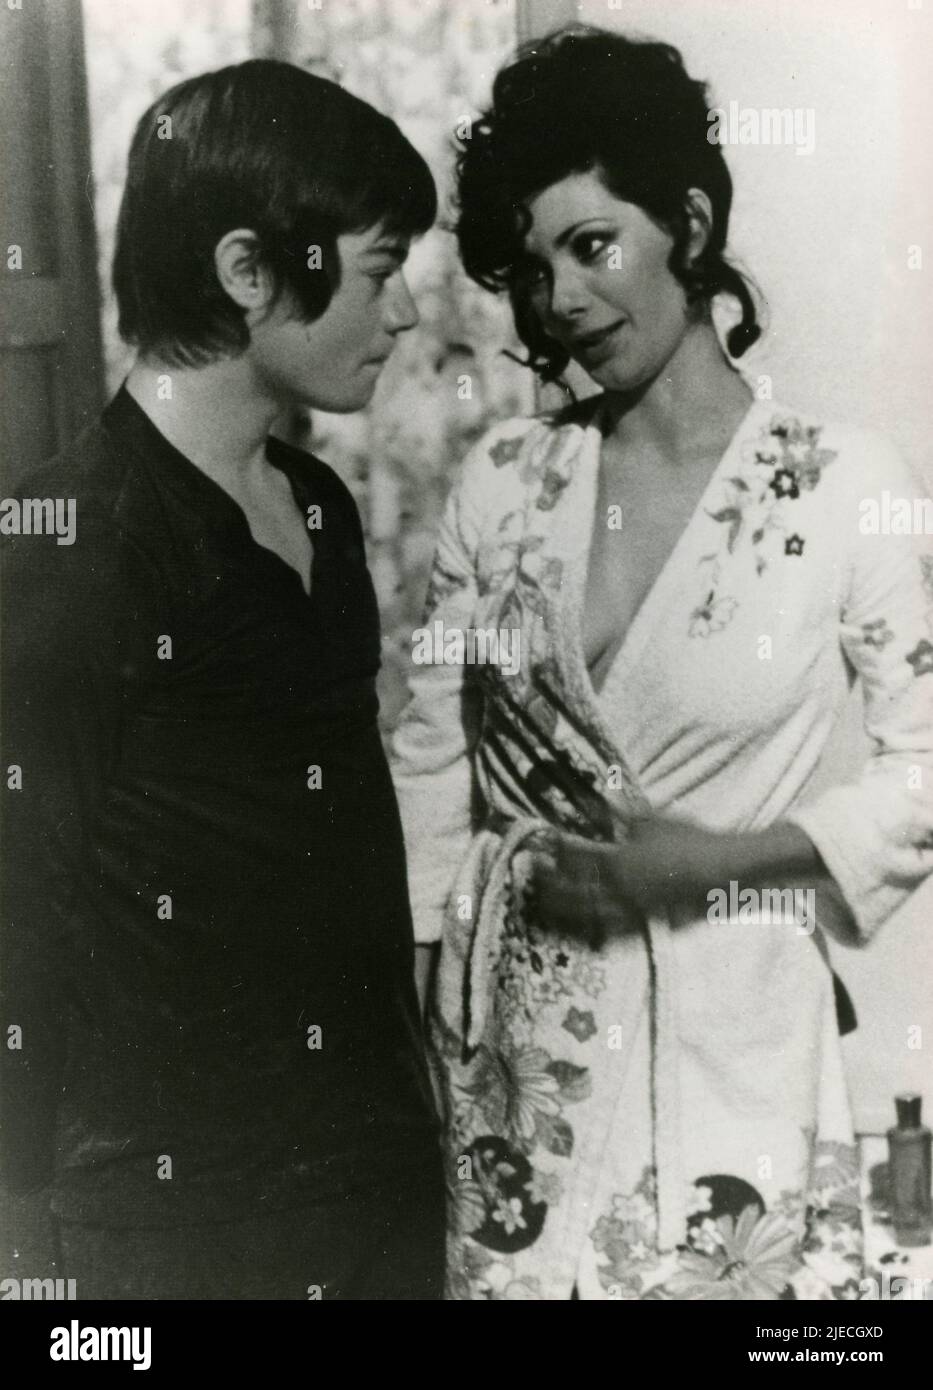 Italian actor and terrorist Valerio Fioravanti and actress Edwige Fenech in the movie Lover Boy (Grazie…nonna), Italy 1975 Stock Photo